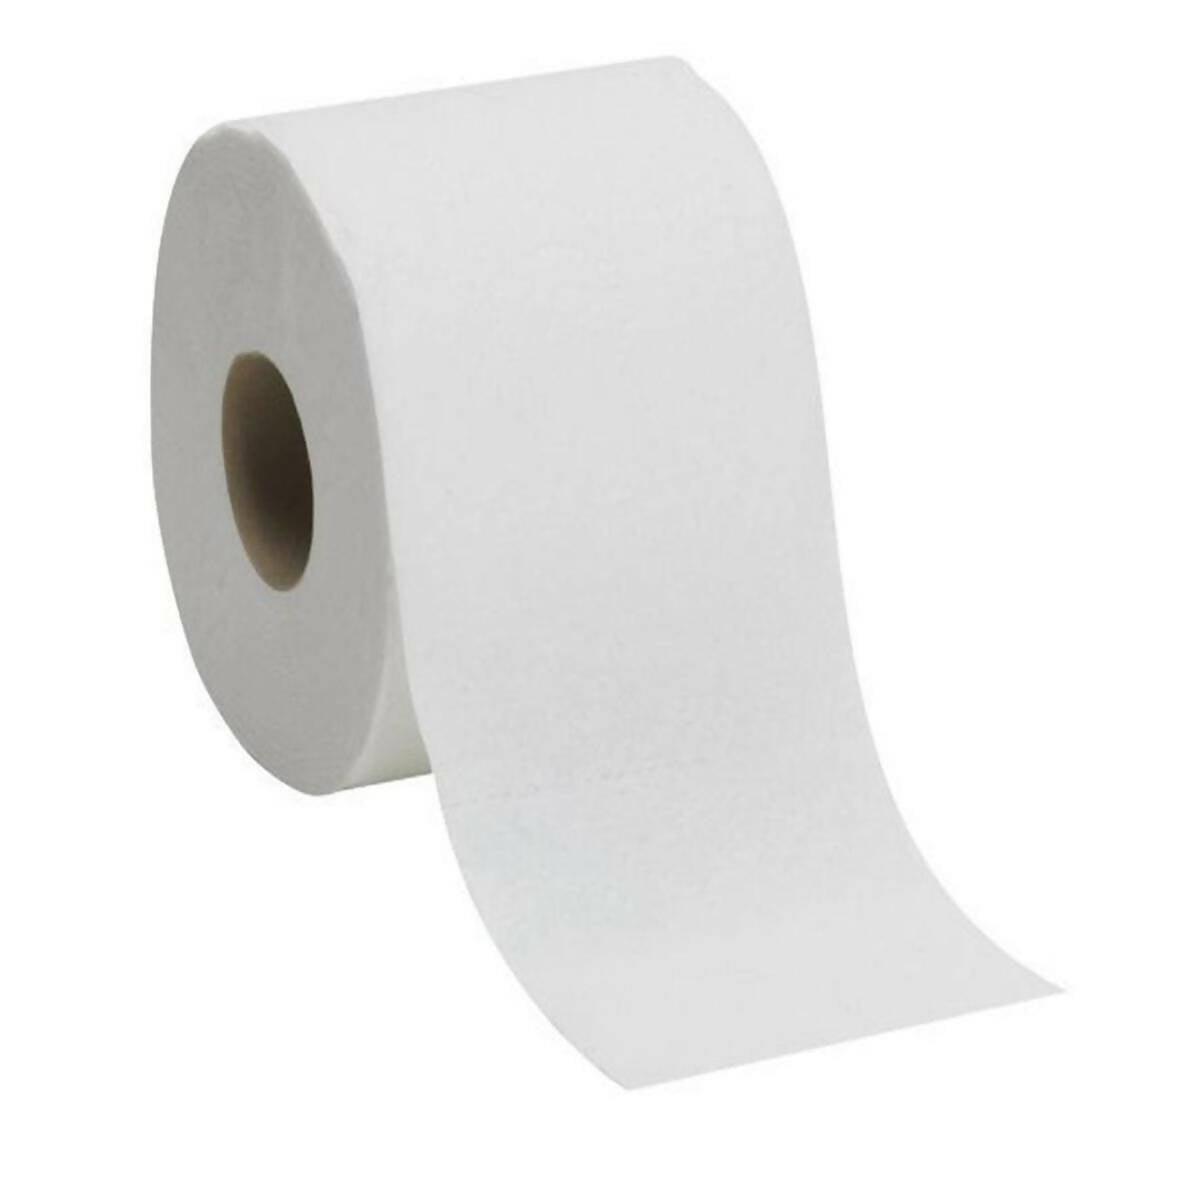 Tissue Rolls Toilet Tissue Paper Roll